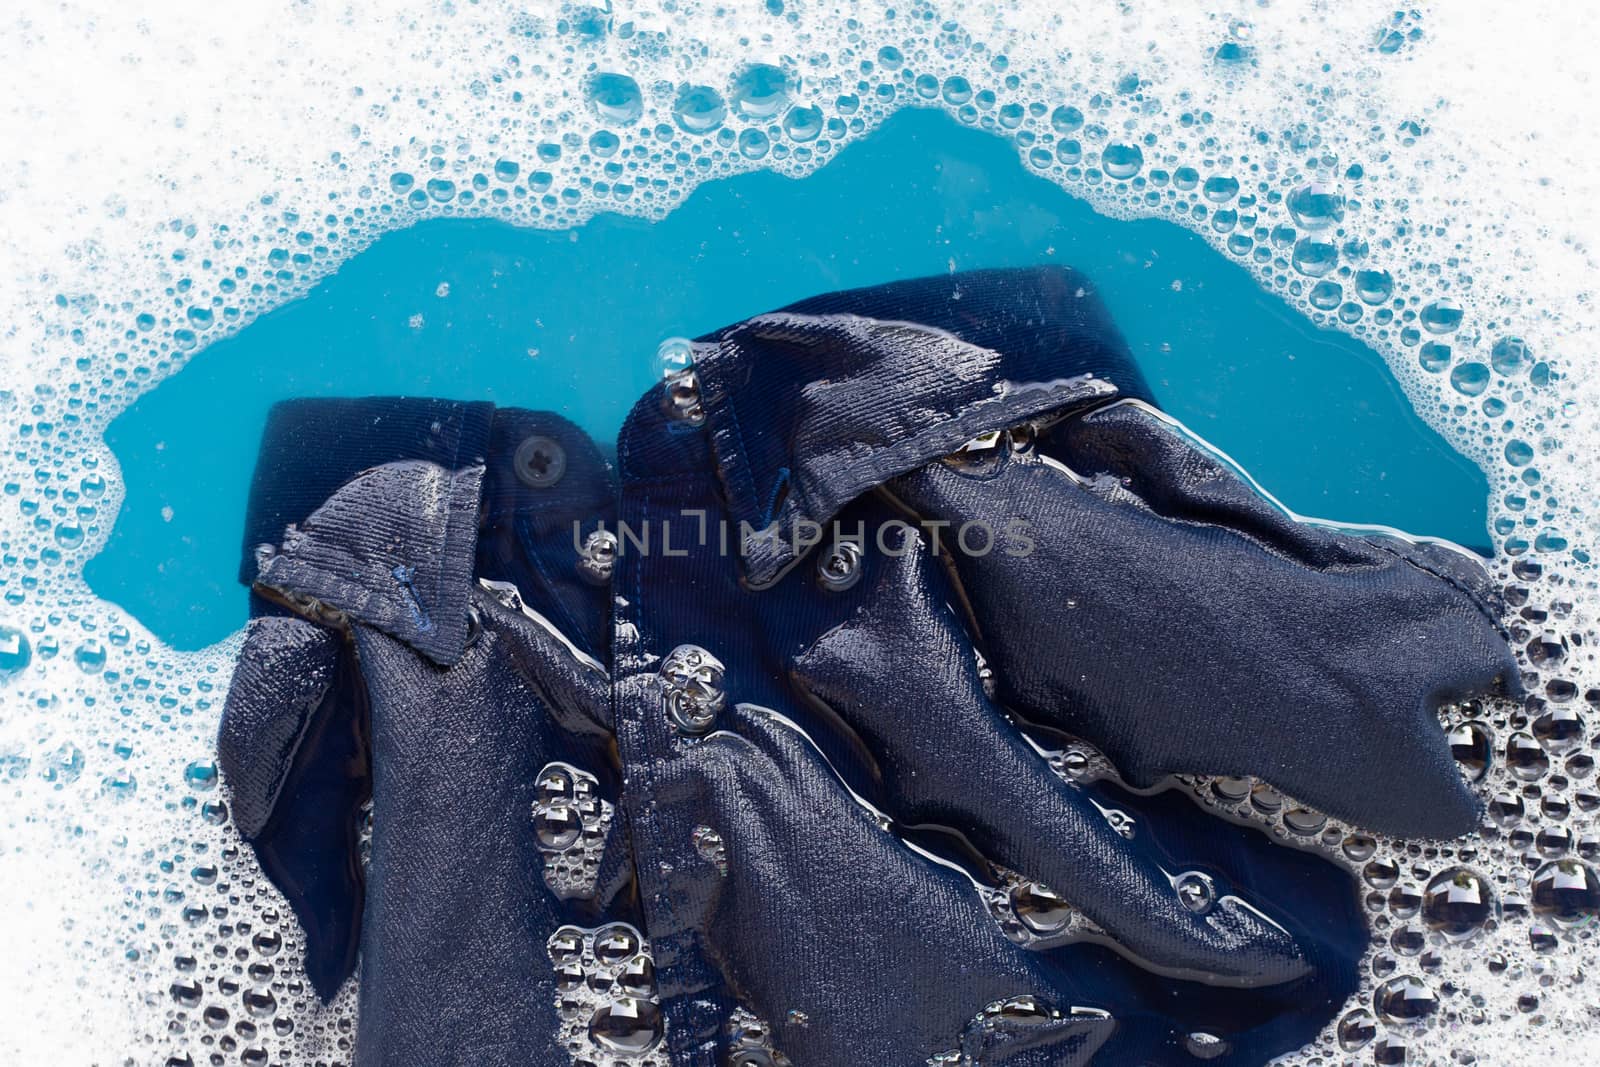 Shirt soak in powder detergent water dissolution, washing cloth. Laundry concept